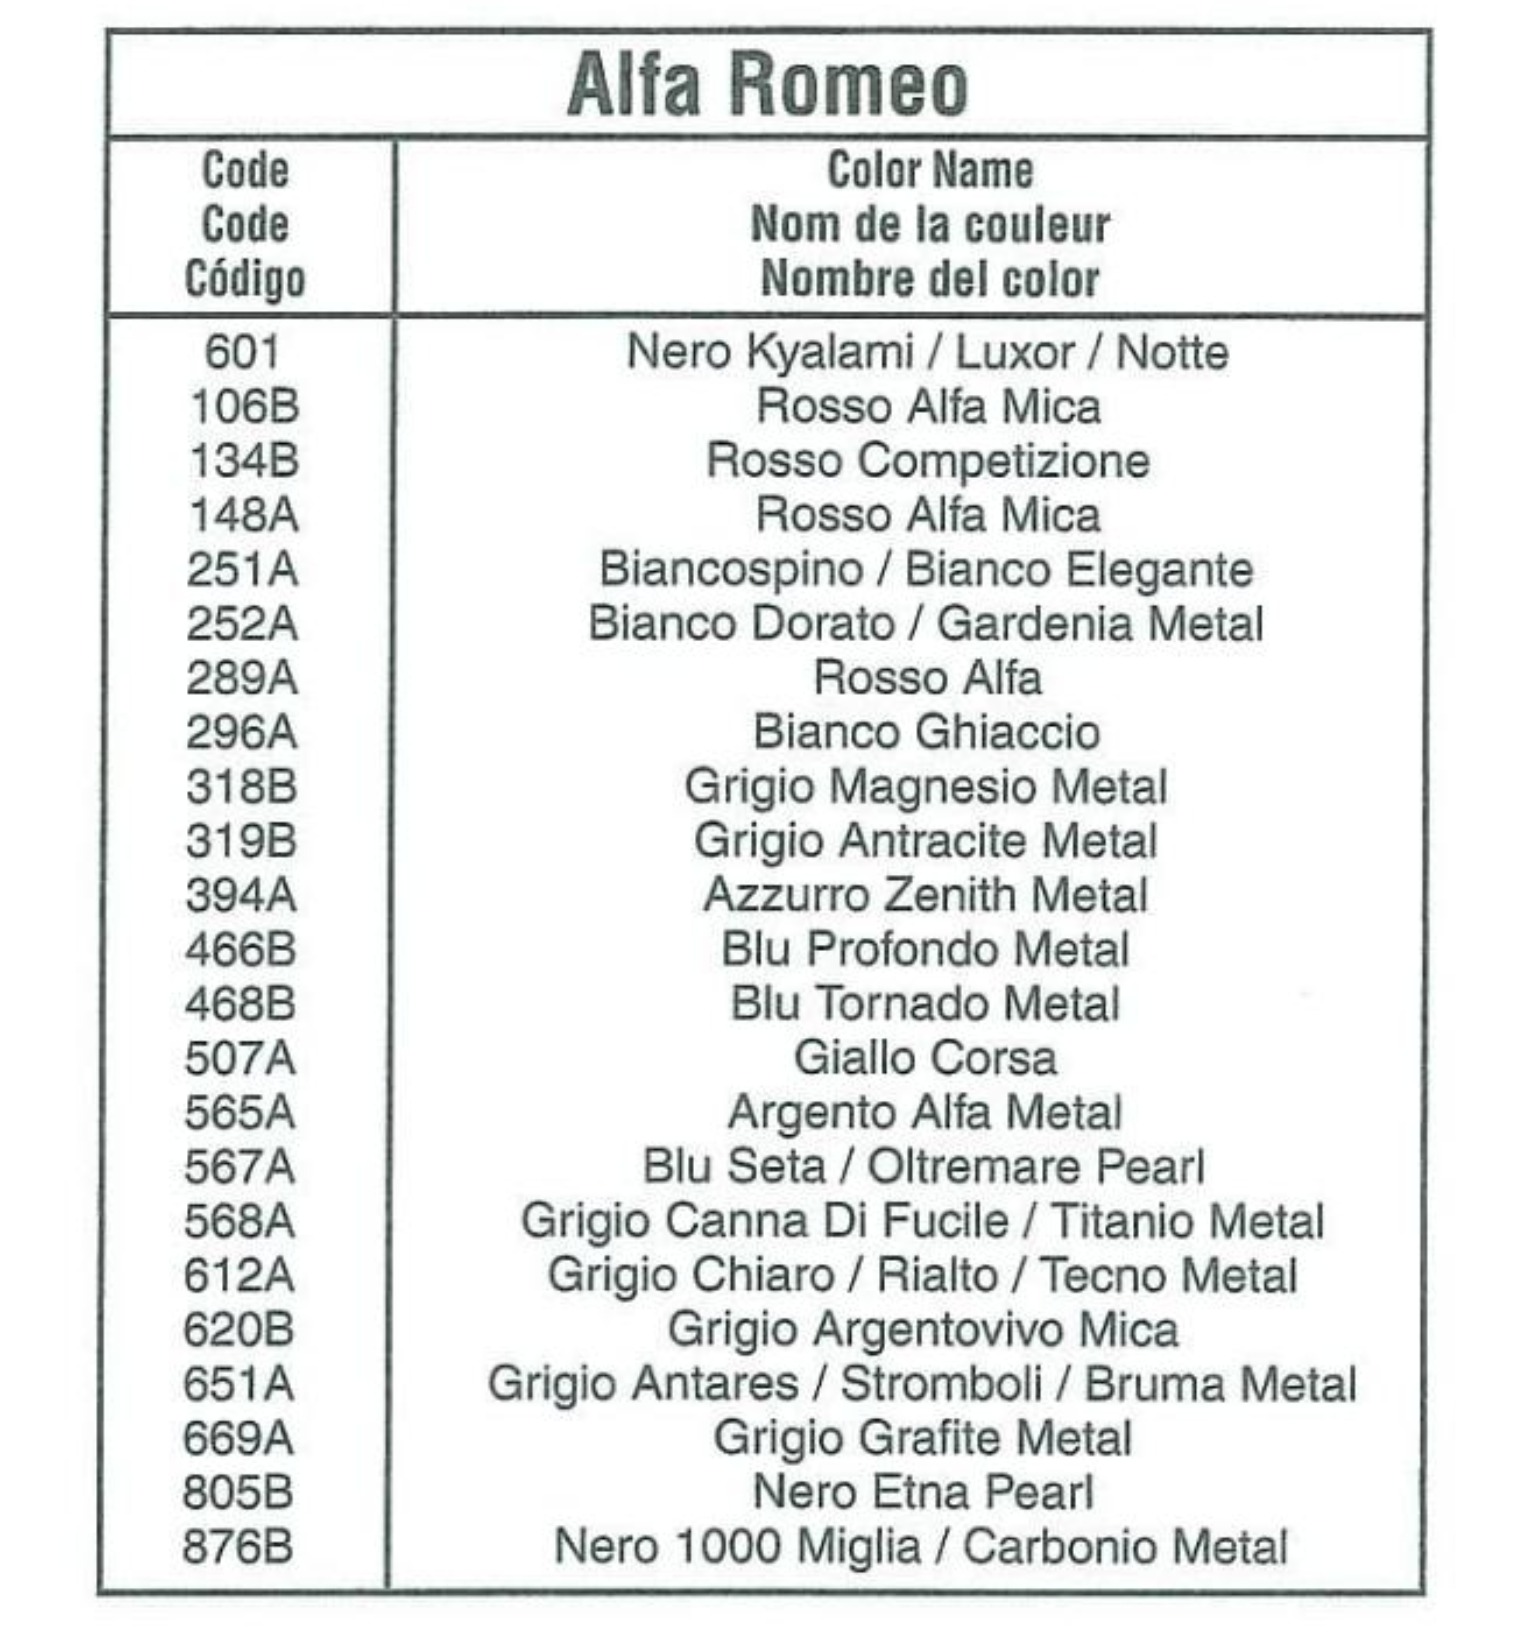 List of all Alfa Romeo Colors